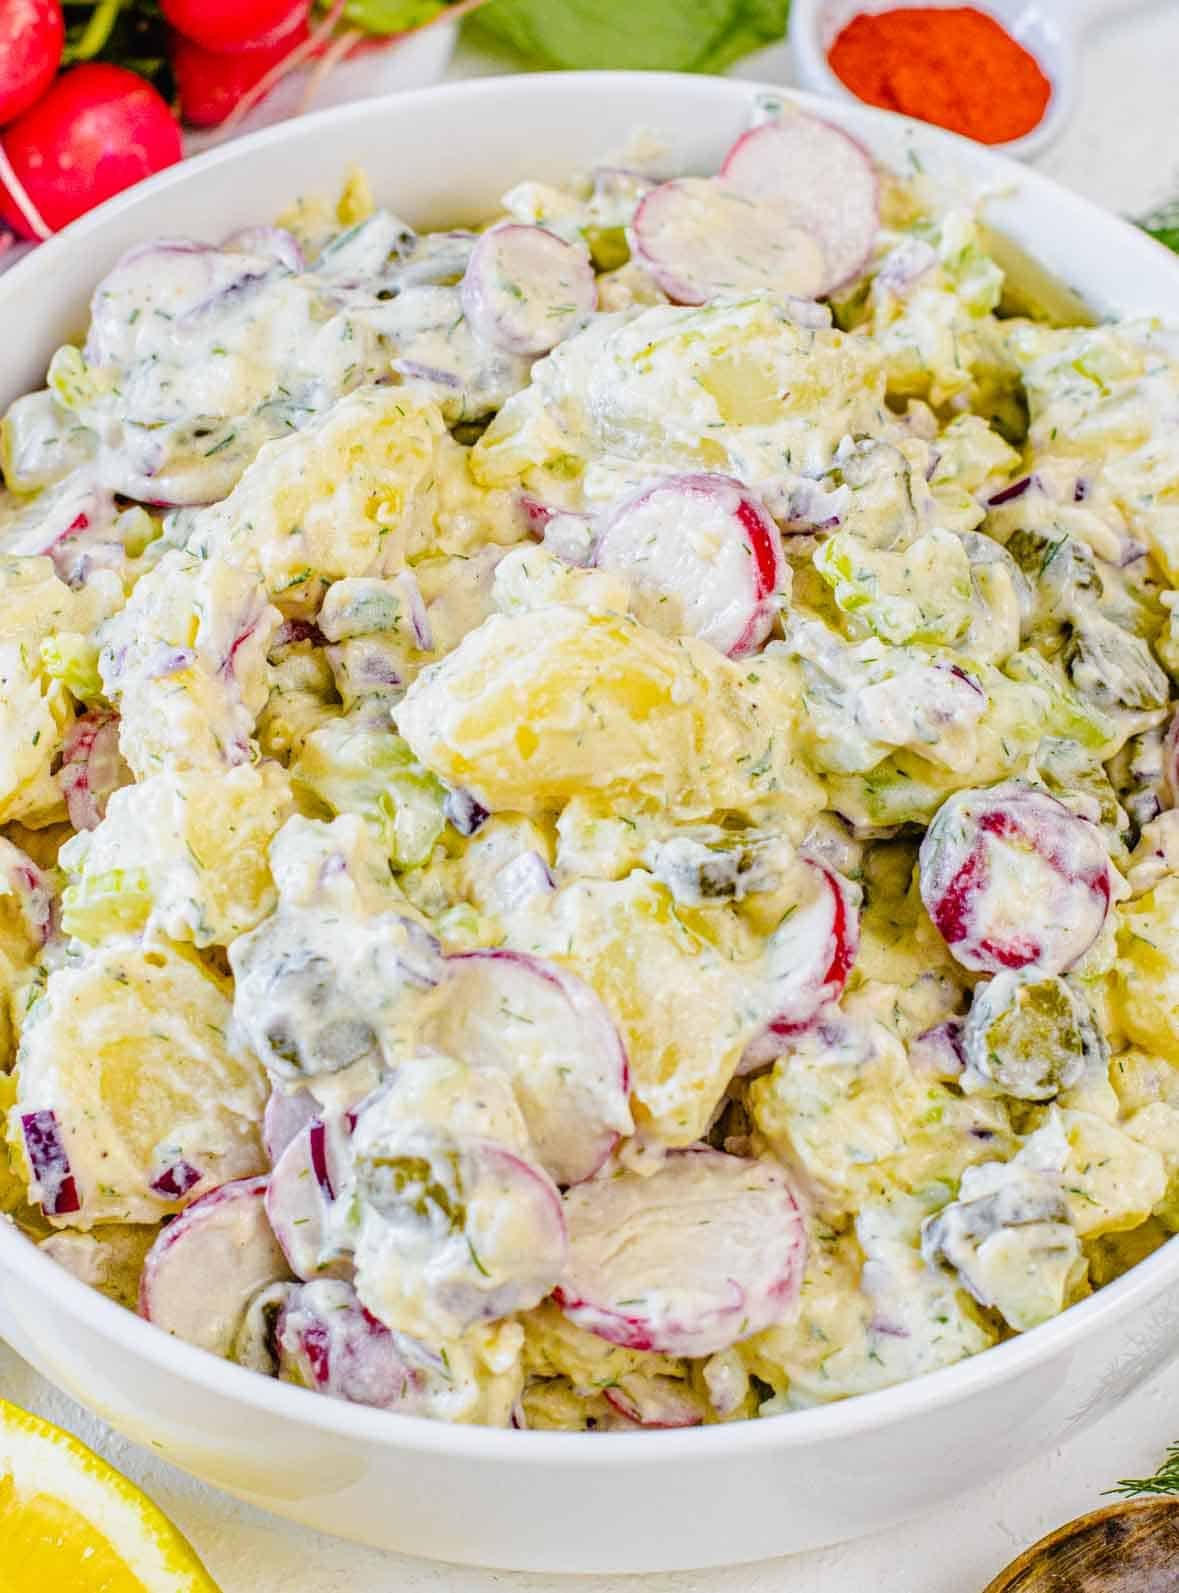 Creamy Dill potato salad